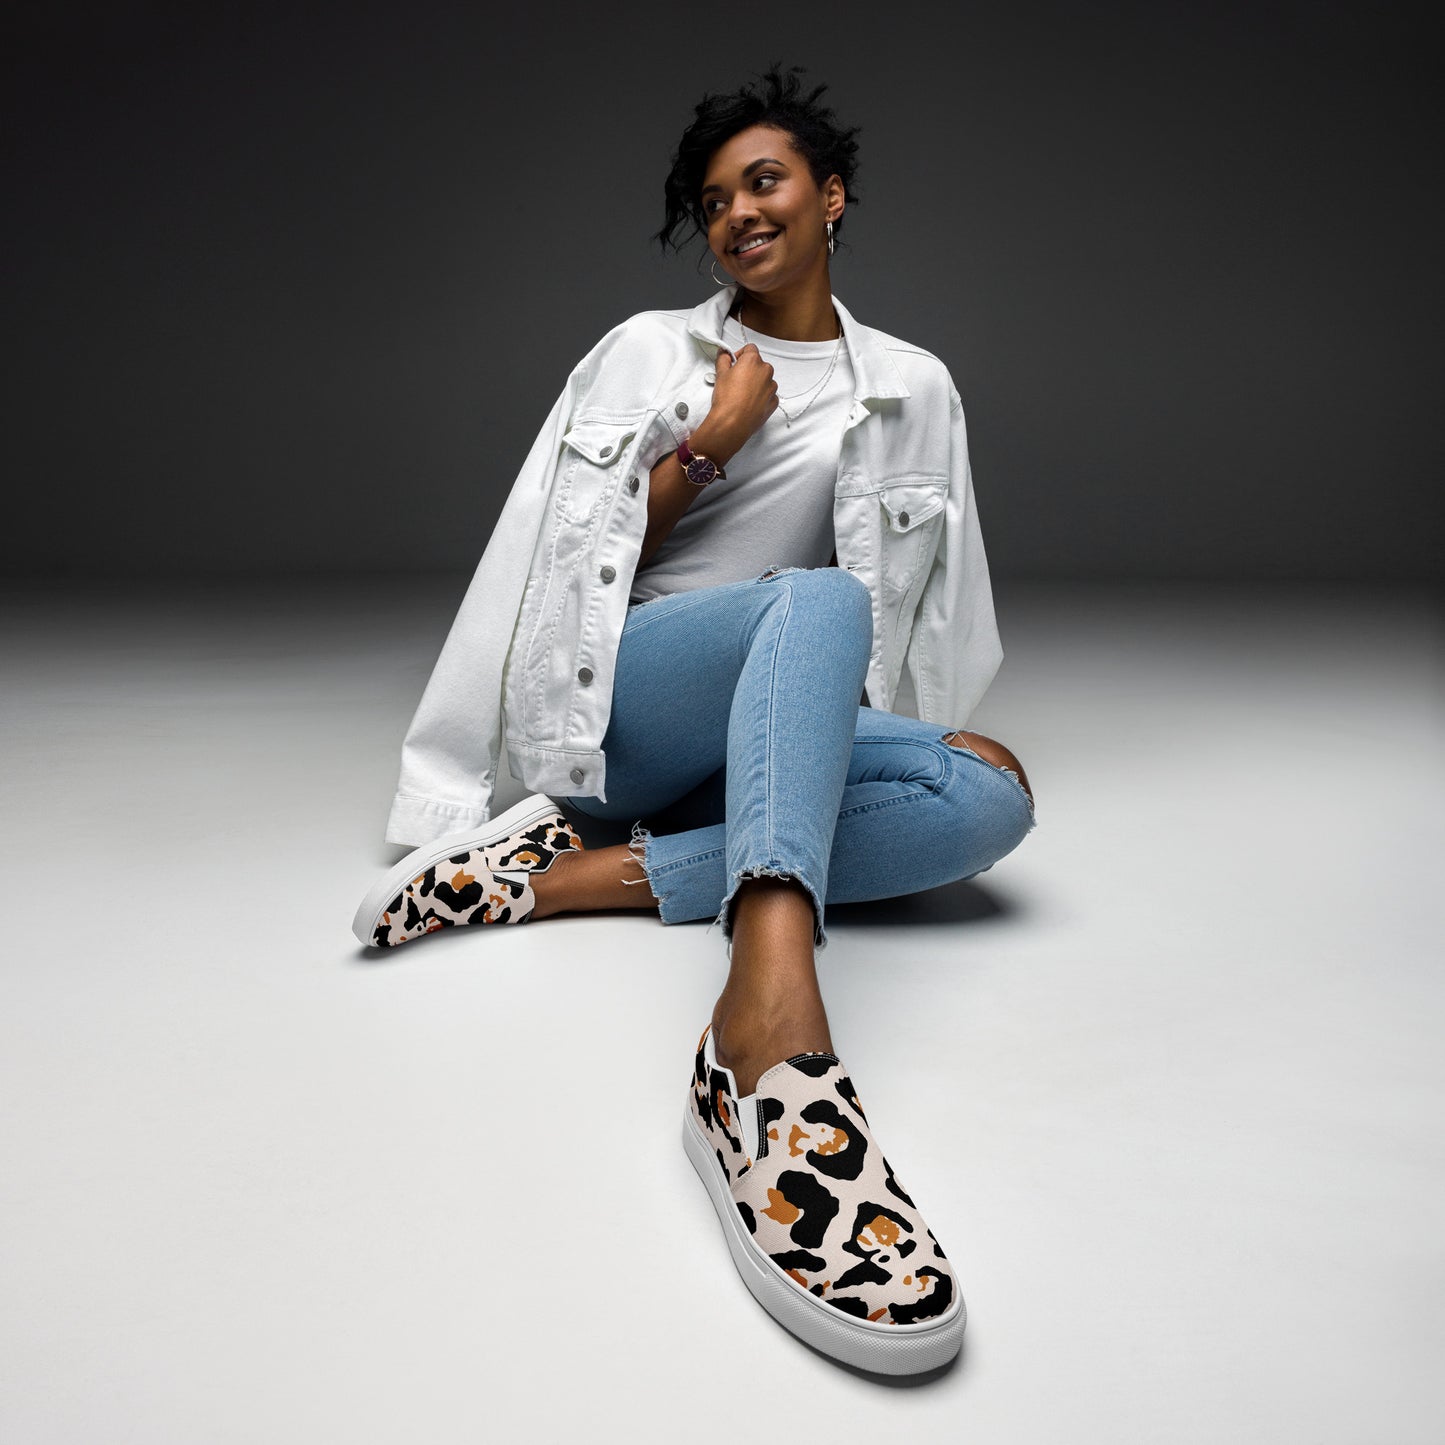 Women’s Leopard slip-on canvas shoes